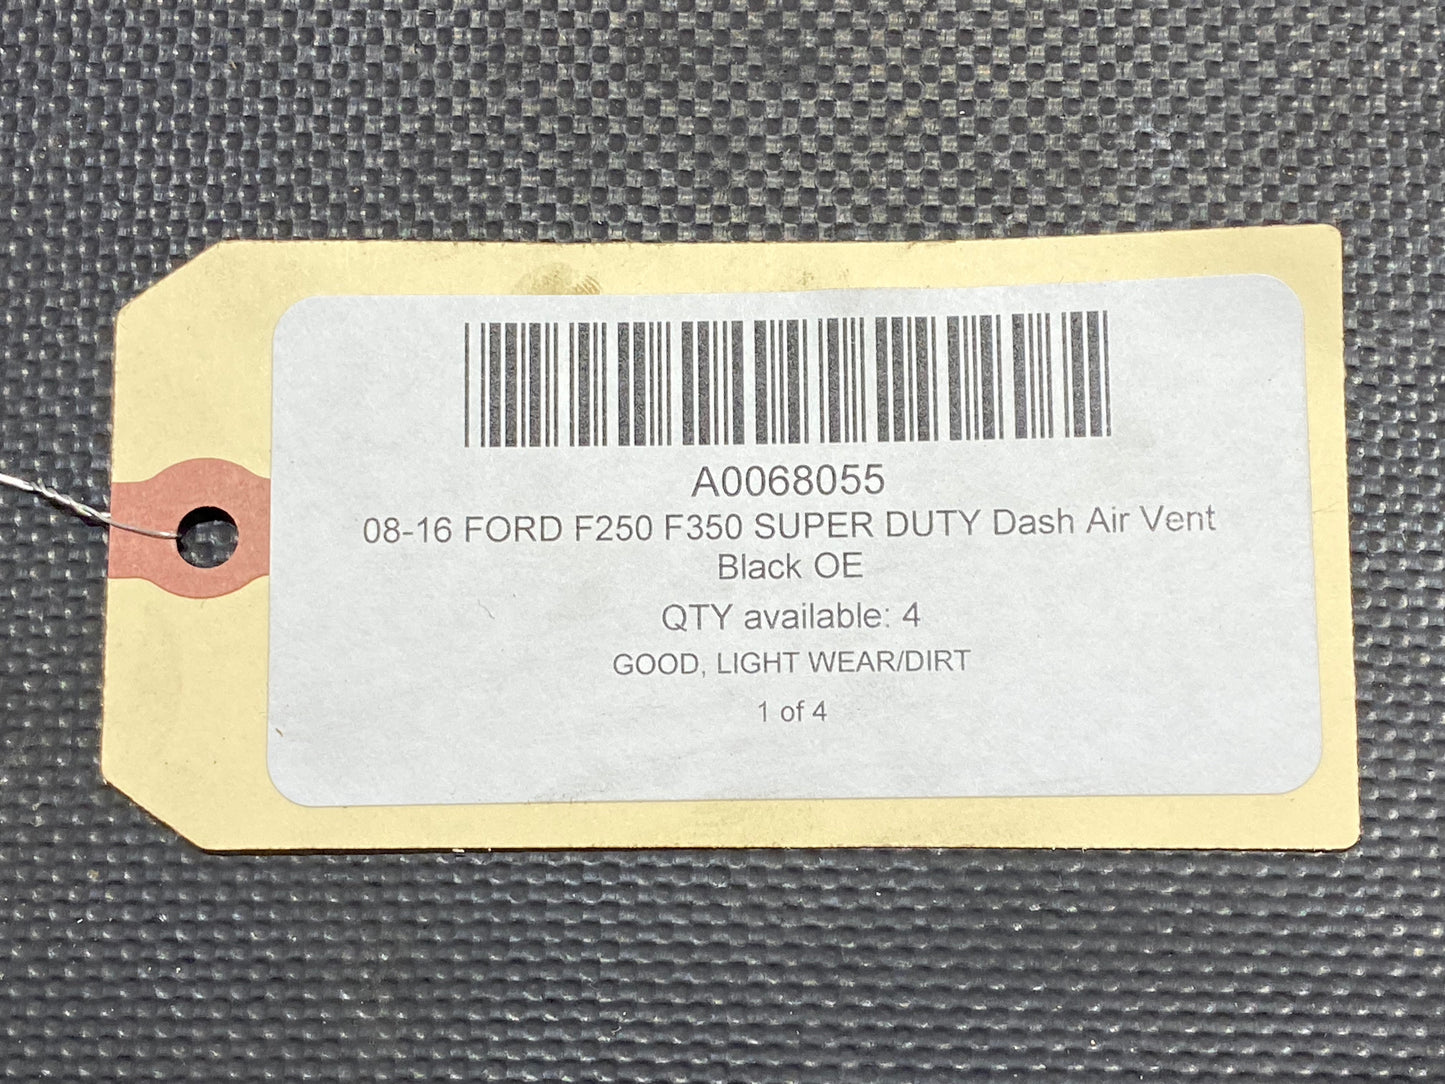 08-16 Ford F250 F350 Super Duty Dash Air Vent Black OE